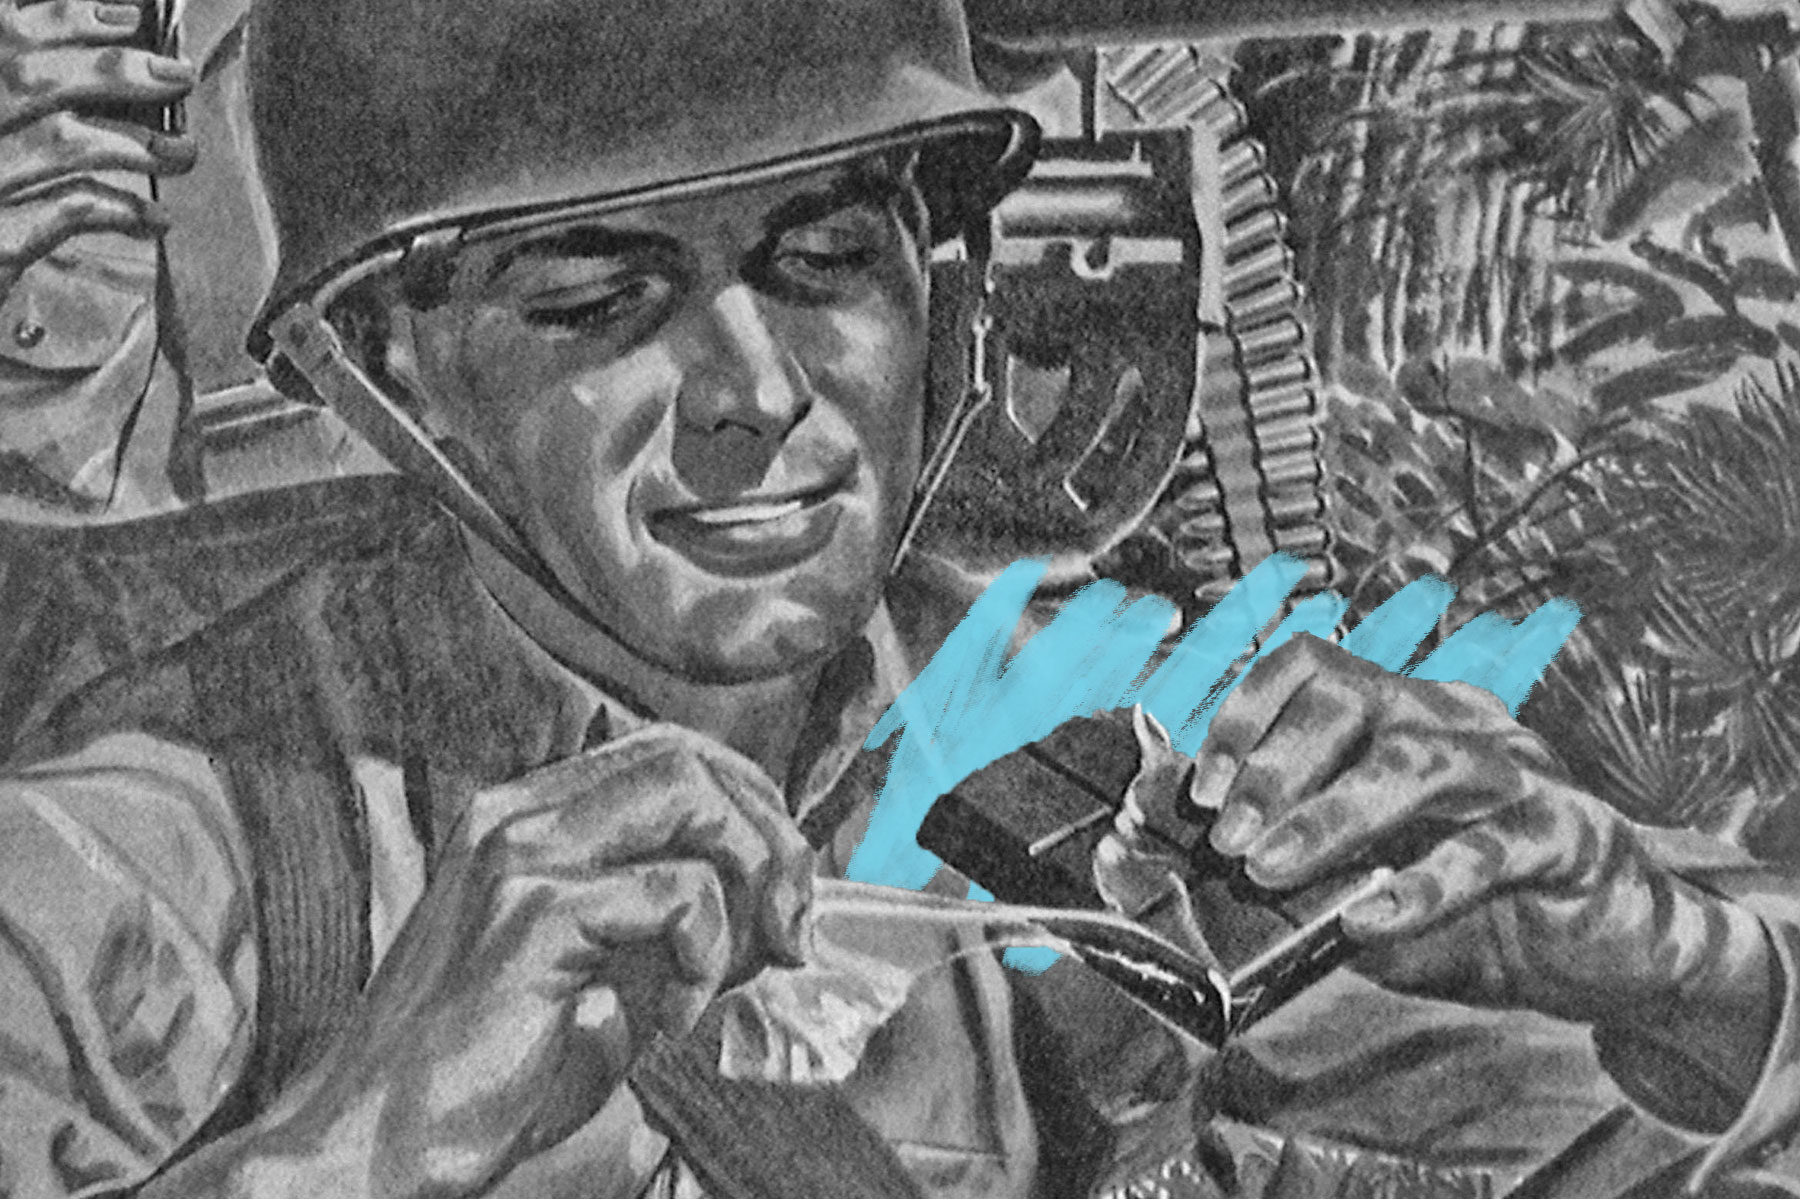 Soldier unwraps chocolate